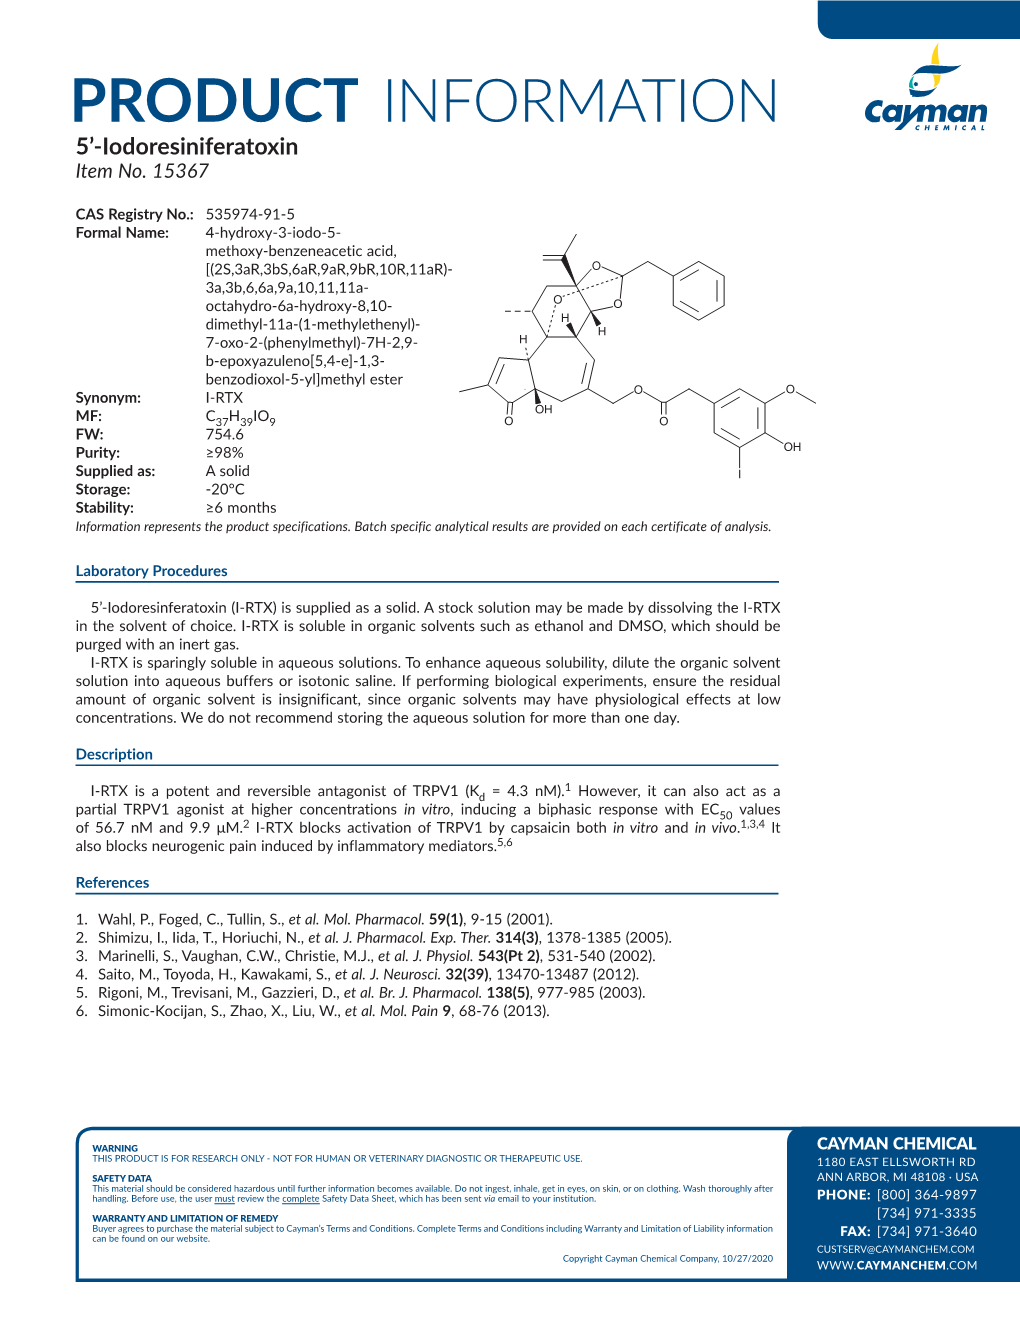 PRODUCT INFORMATION 5’-Iodoresiniferatoxin Item No